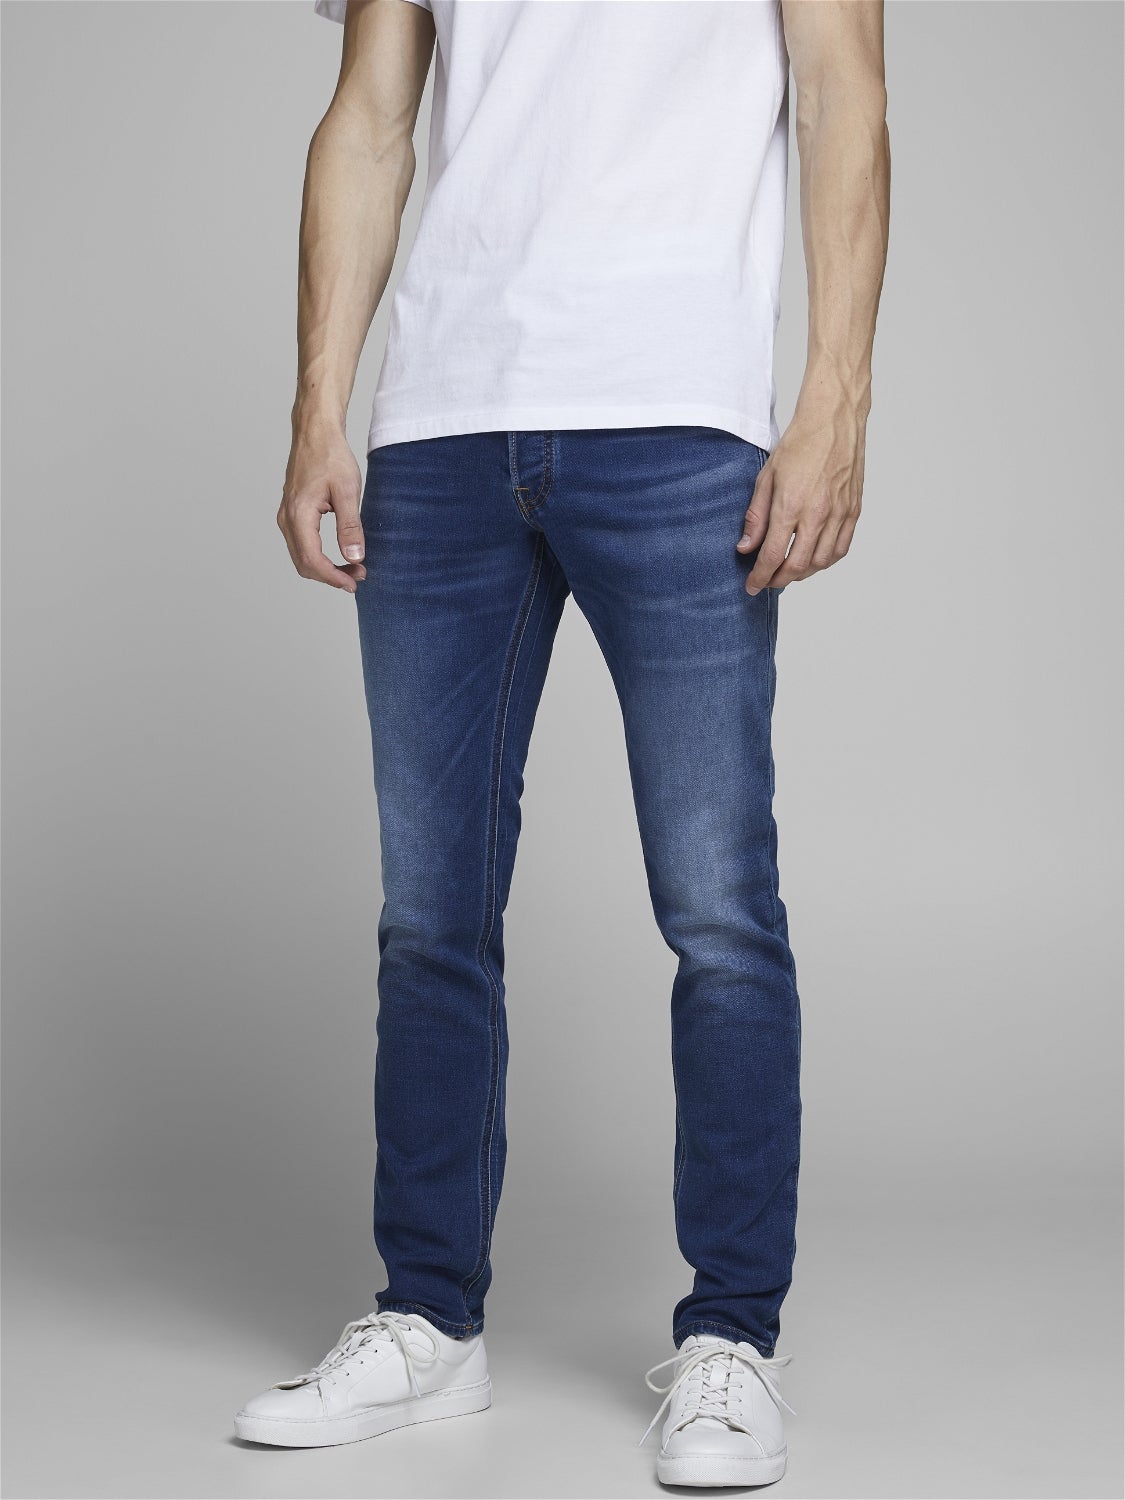 MODA UOMO Jeans Consumato EU: 42 Blu 48 sconto 78% Jack & Jones Pantaloncini jeans 